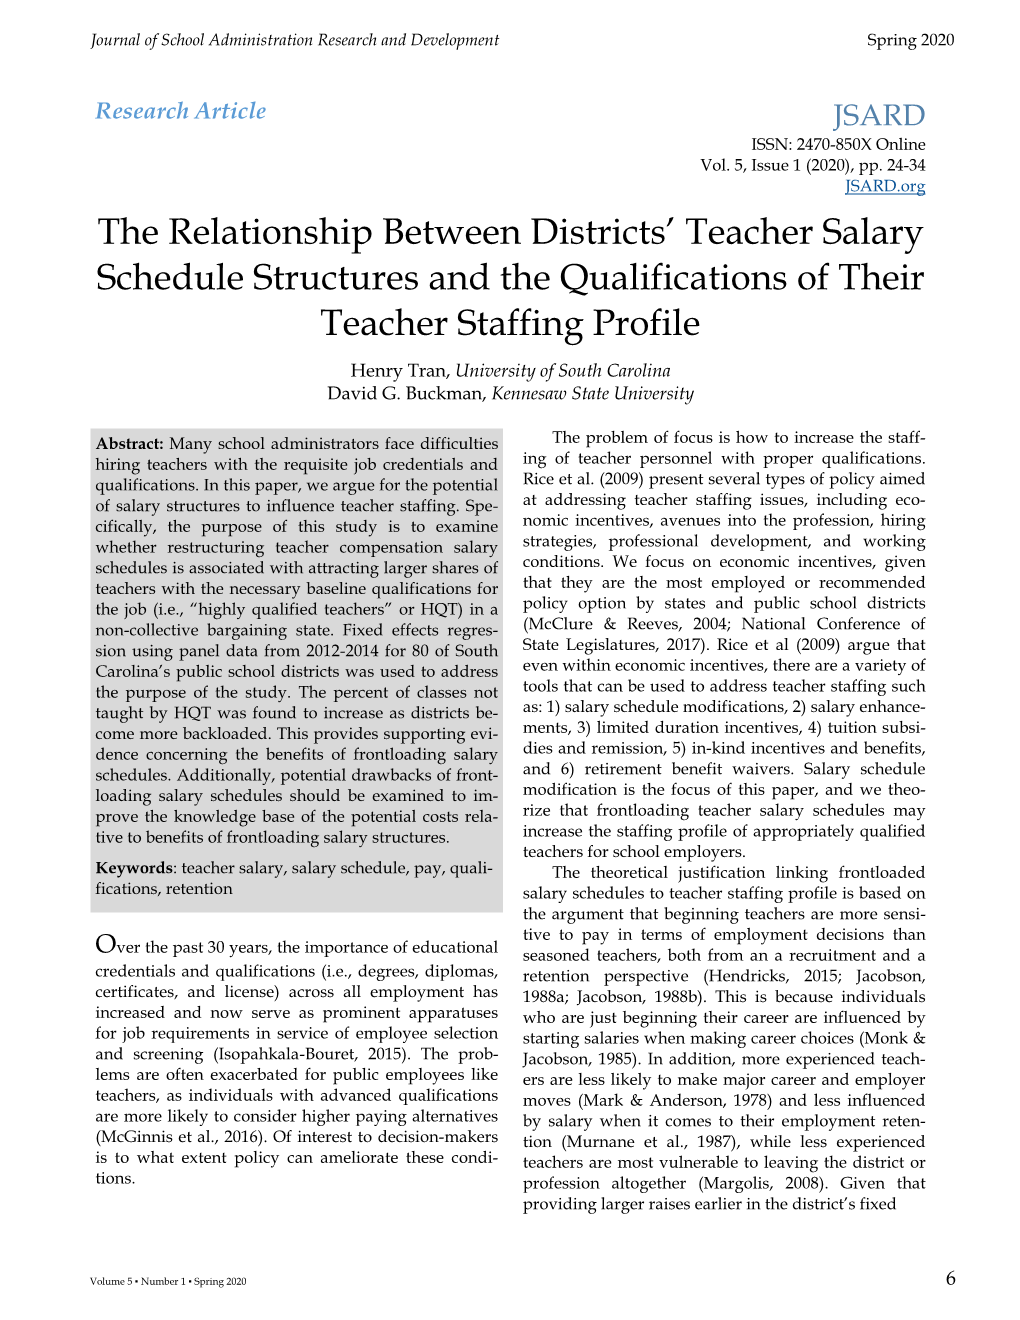 The Relationship Between Districts' Teacher Salary Schedule